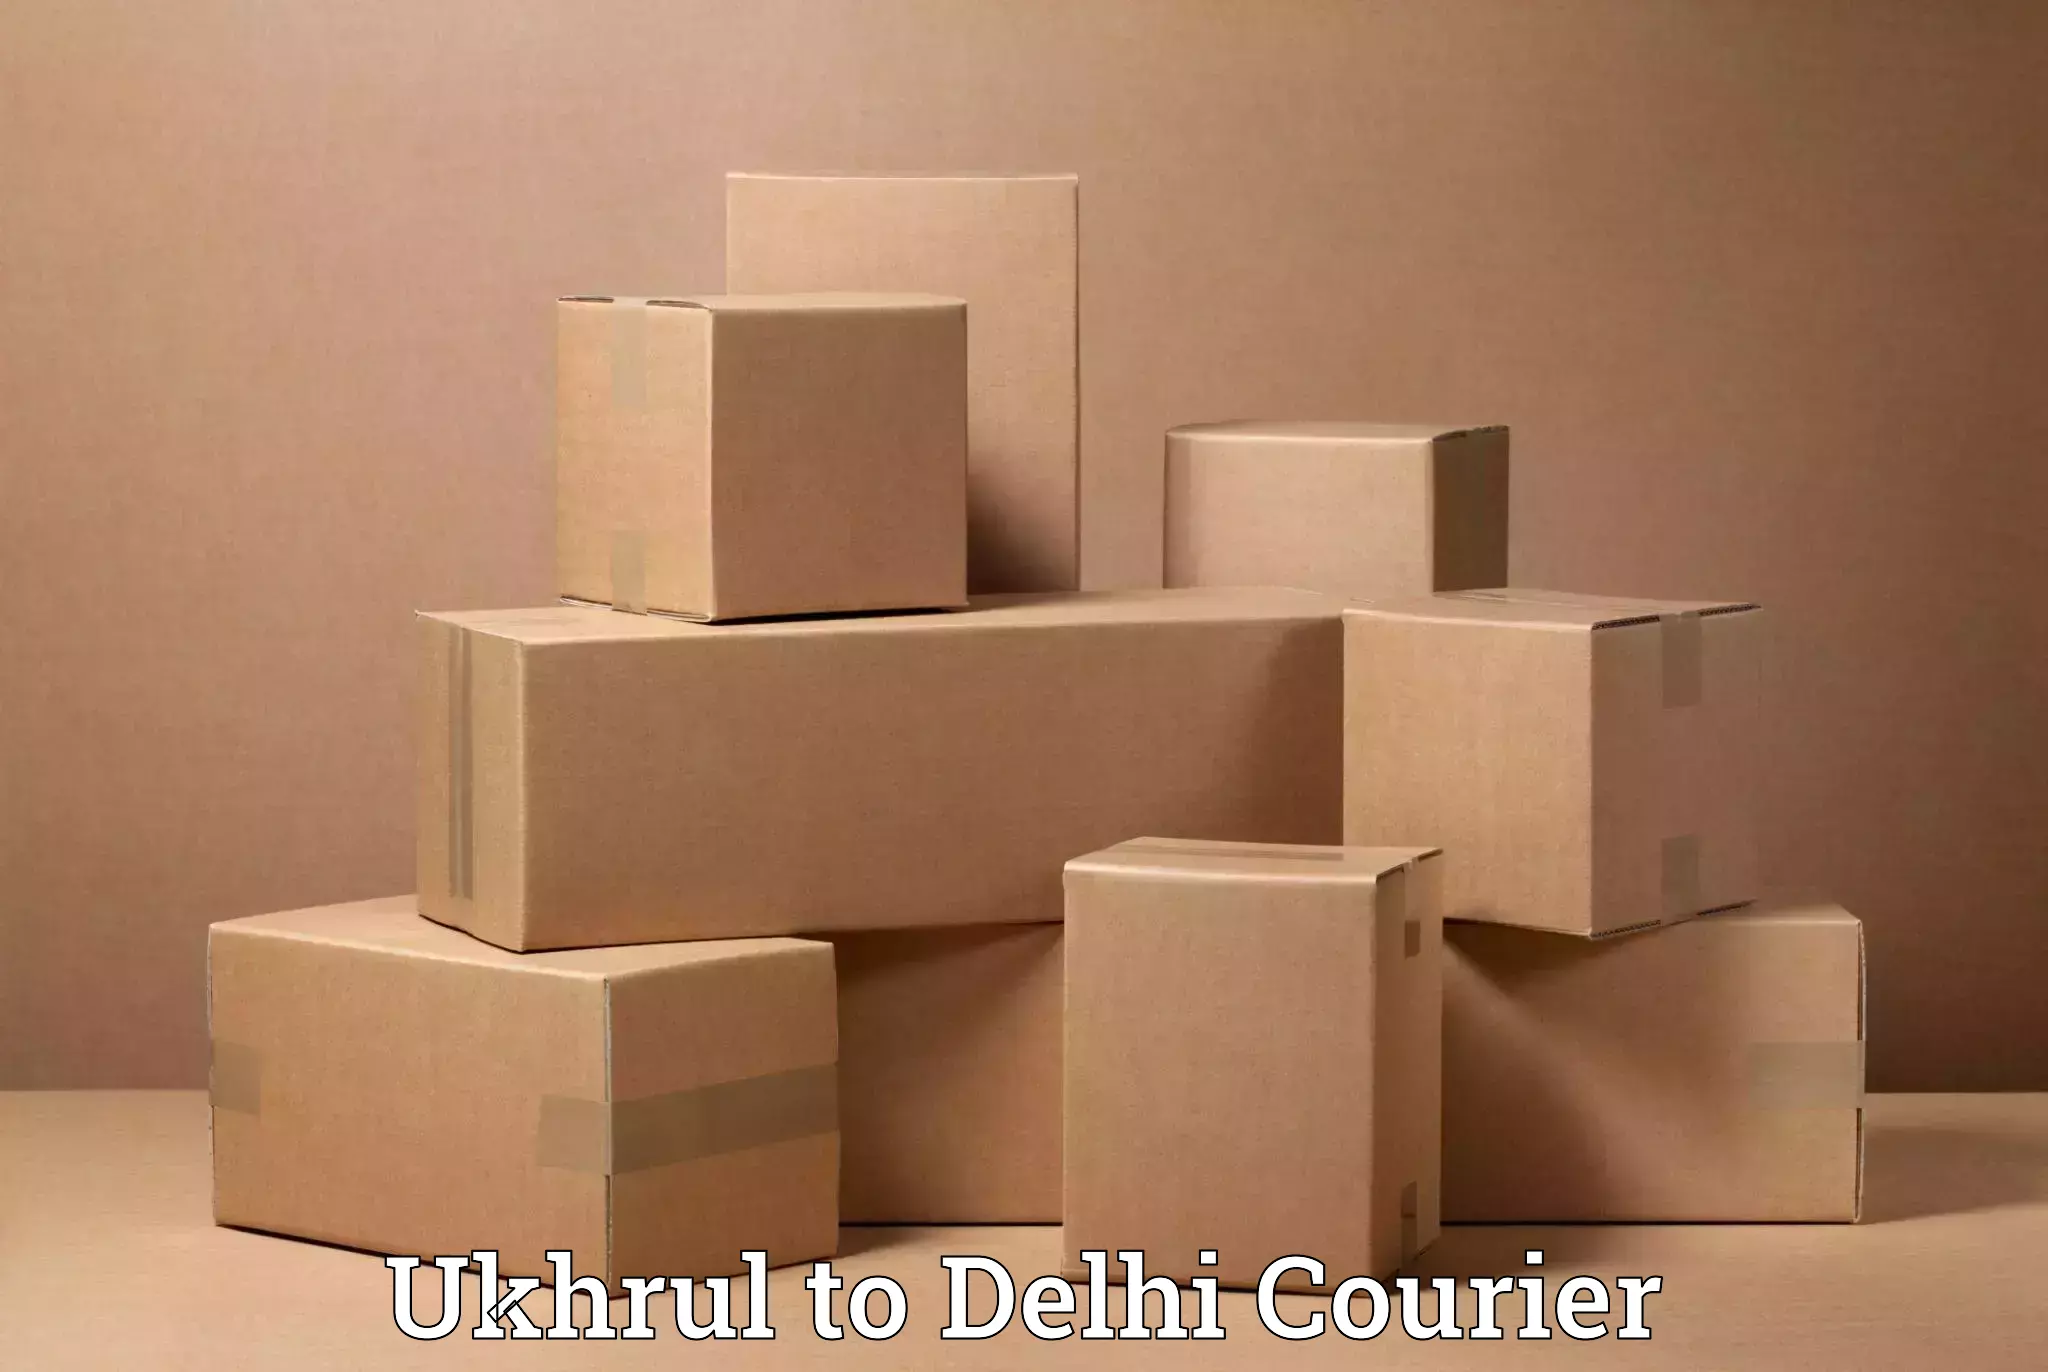 Efficient packing and moving Ukhrul to Jawaharlal Nehru University New Delhi